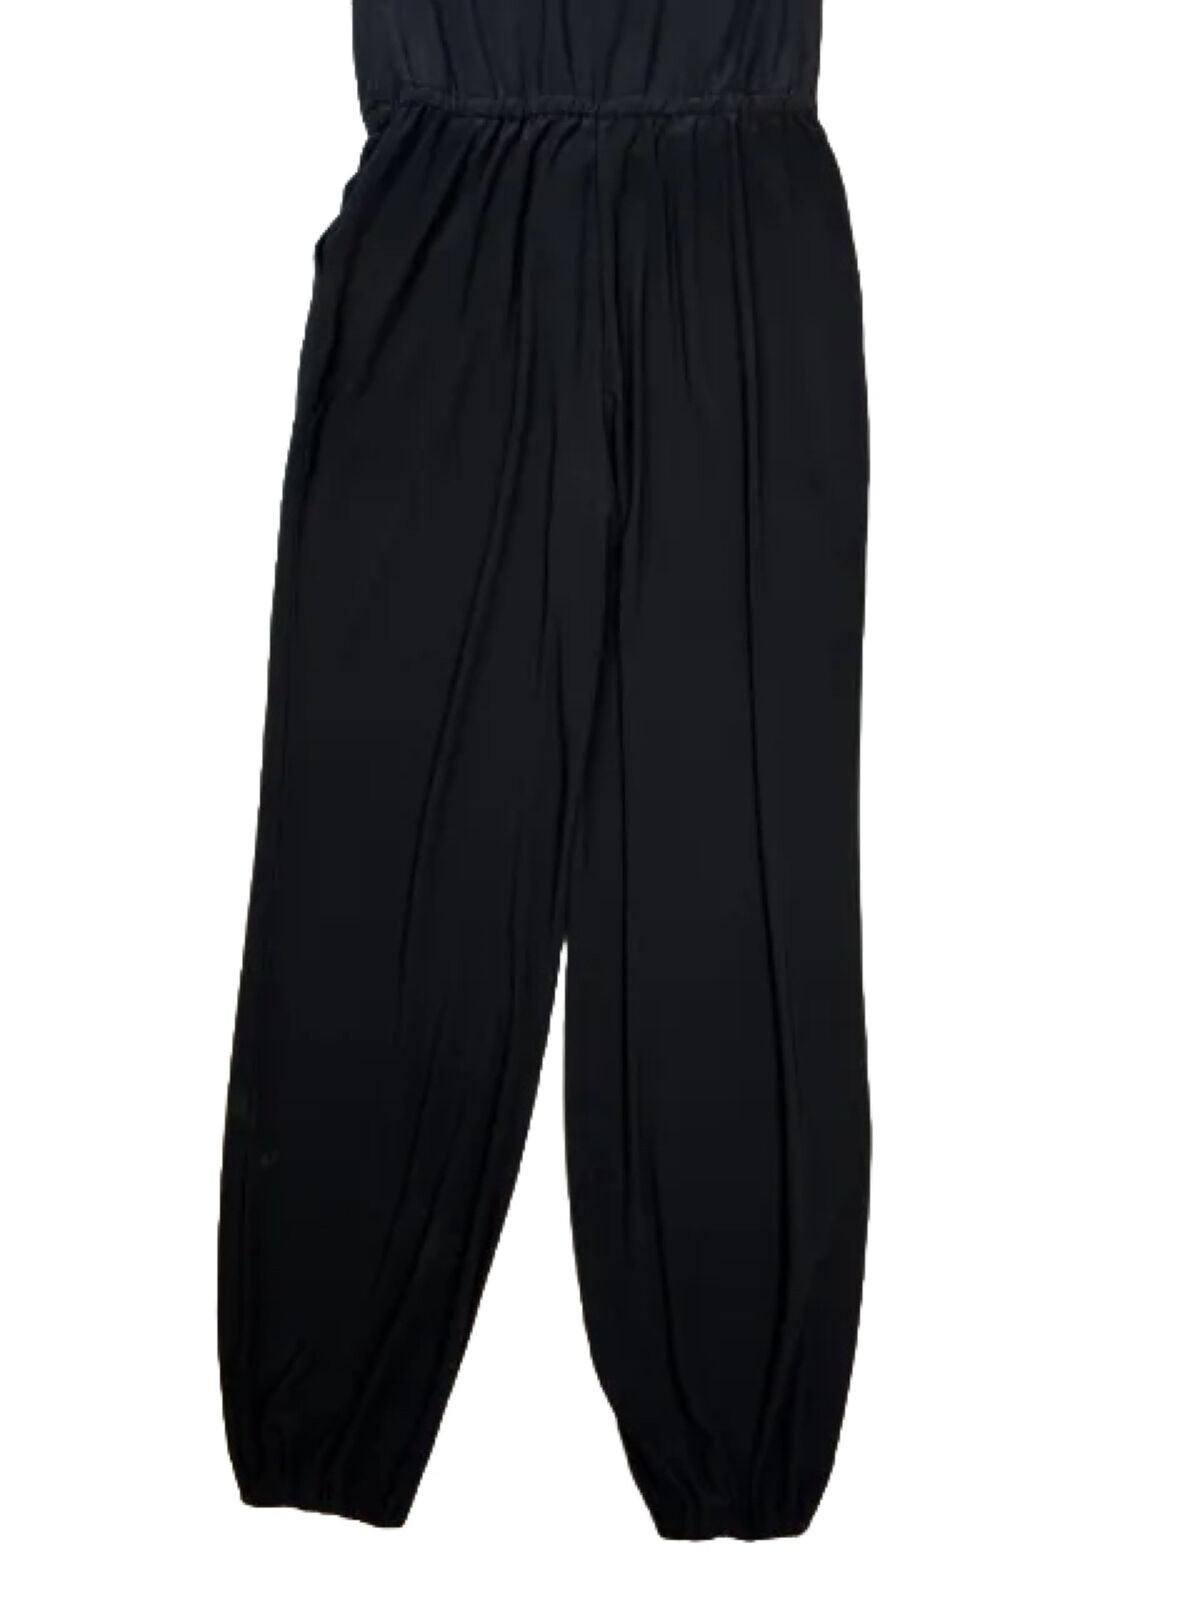 Lauren Ralph Lauren Women's Black Sleeveless Long Jumpsuit - XS